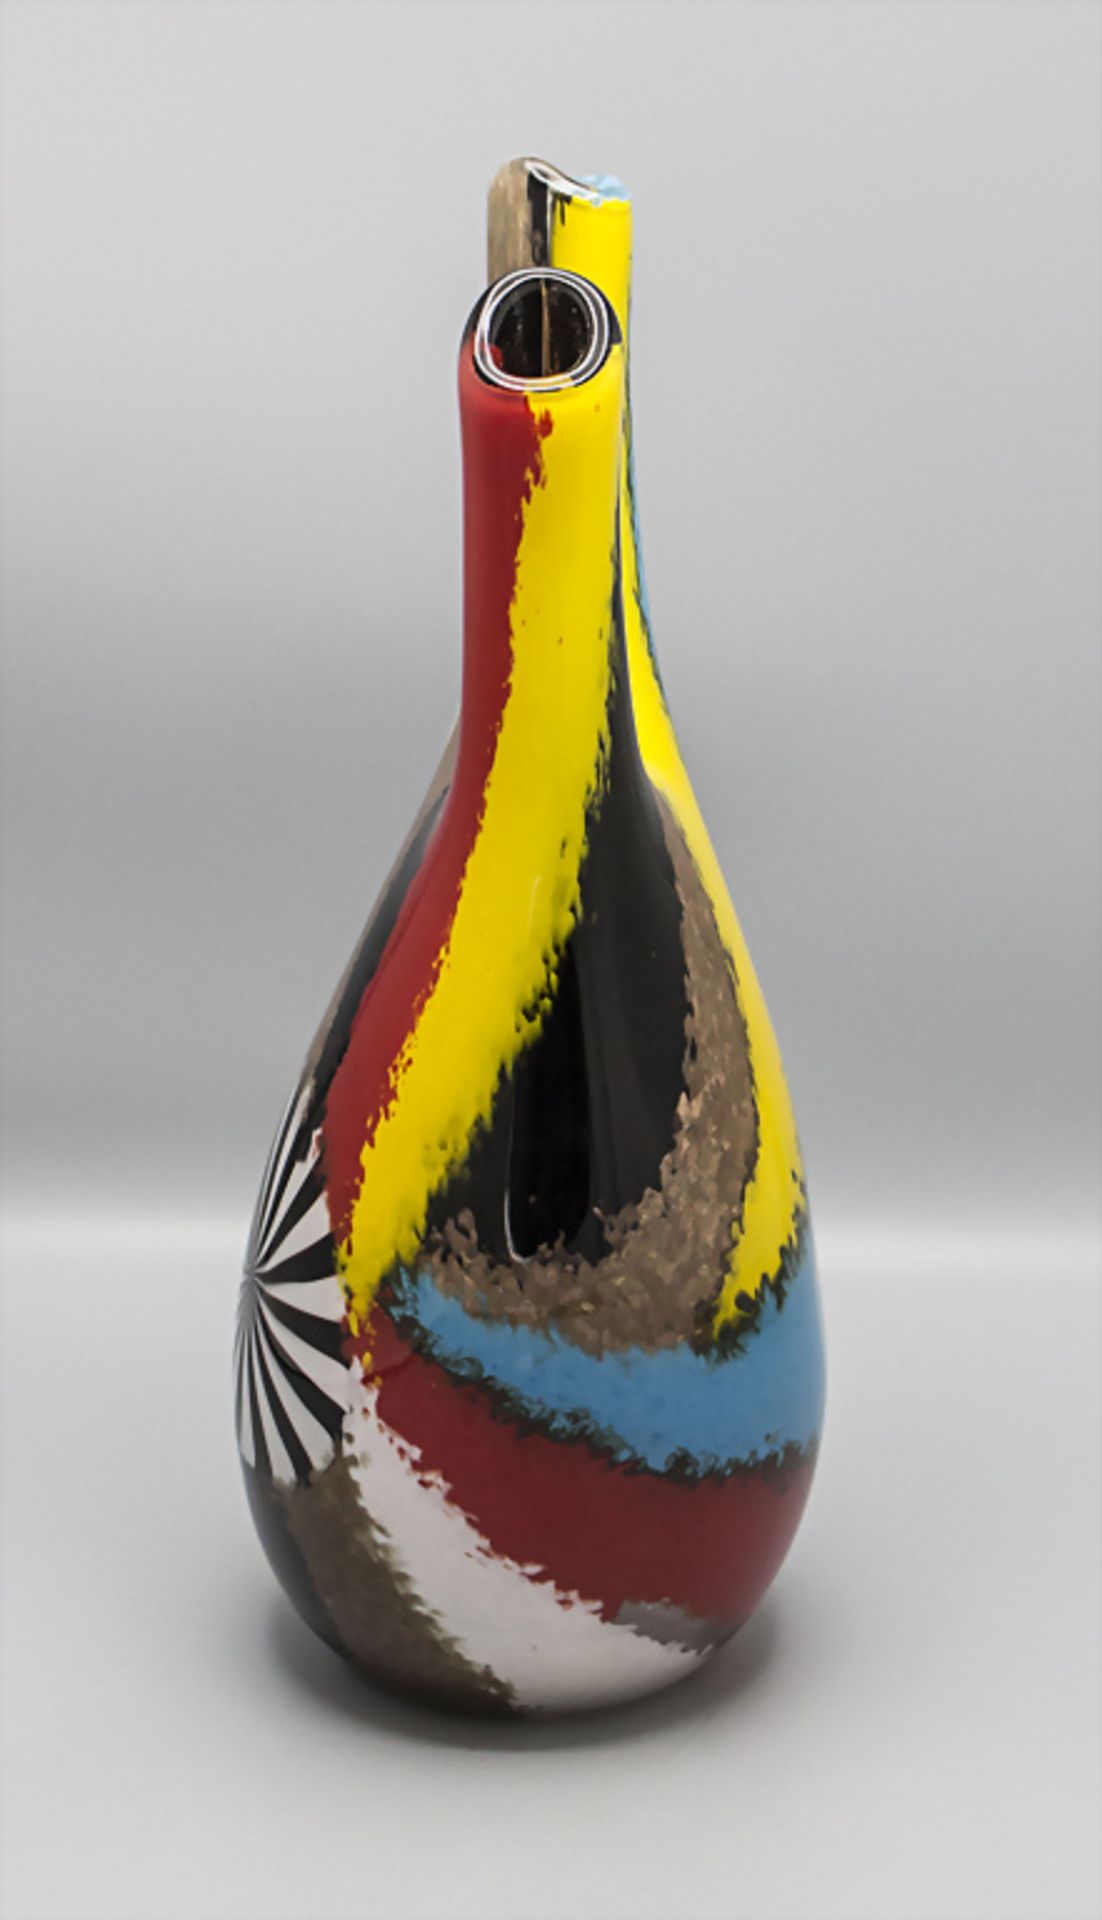 Doppelhalsvase / A double neck vase, Serie 'Oriente Salomone', Dino Martens, Murano, 1950 - Image 4 of 5